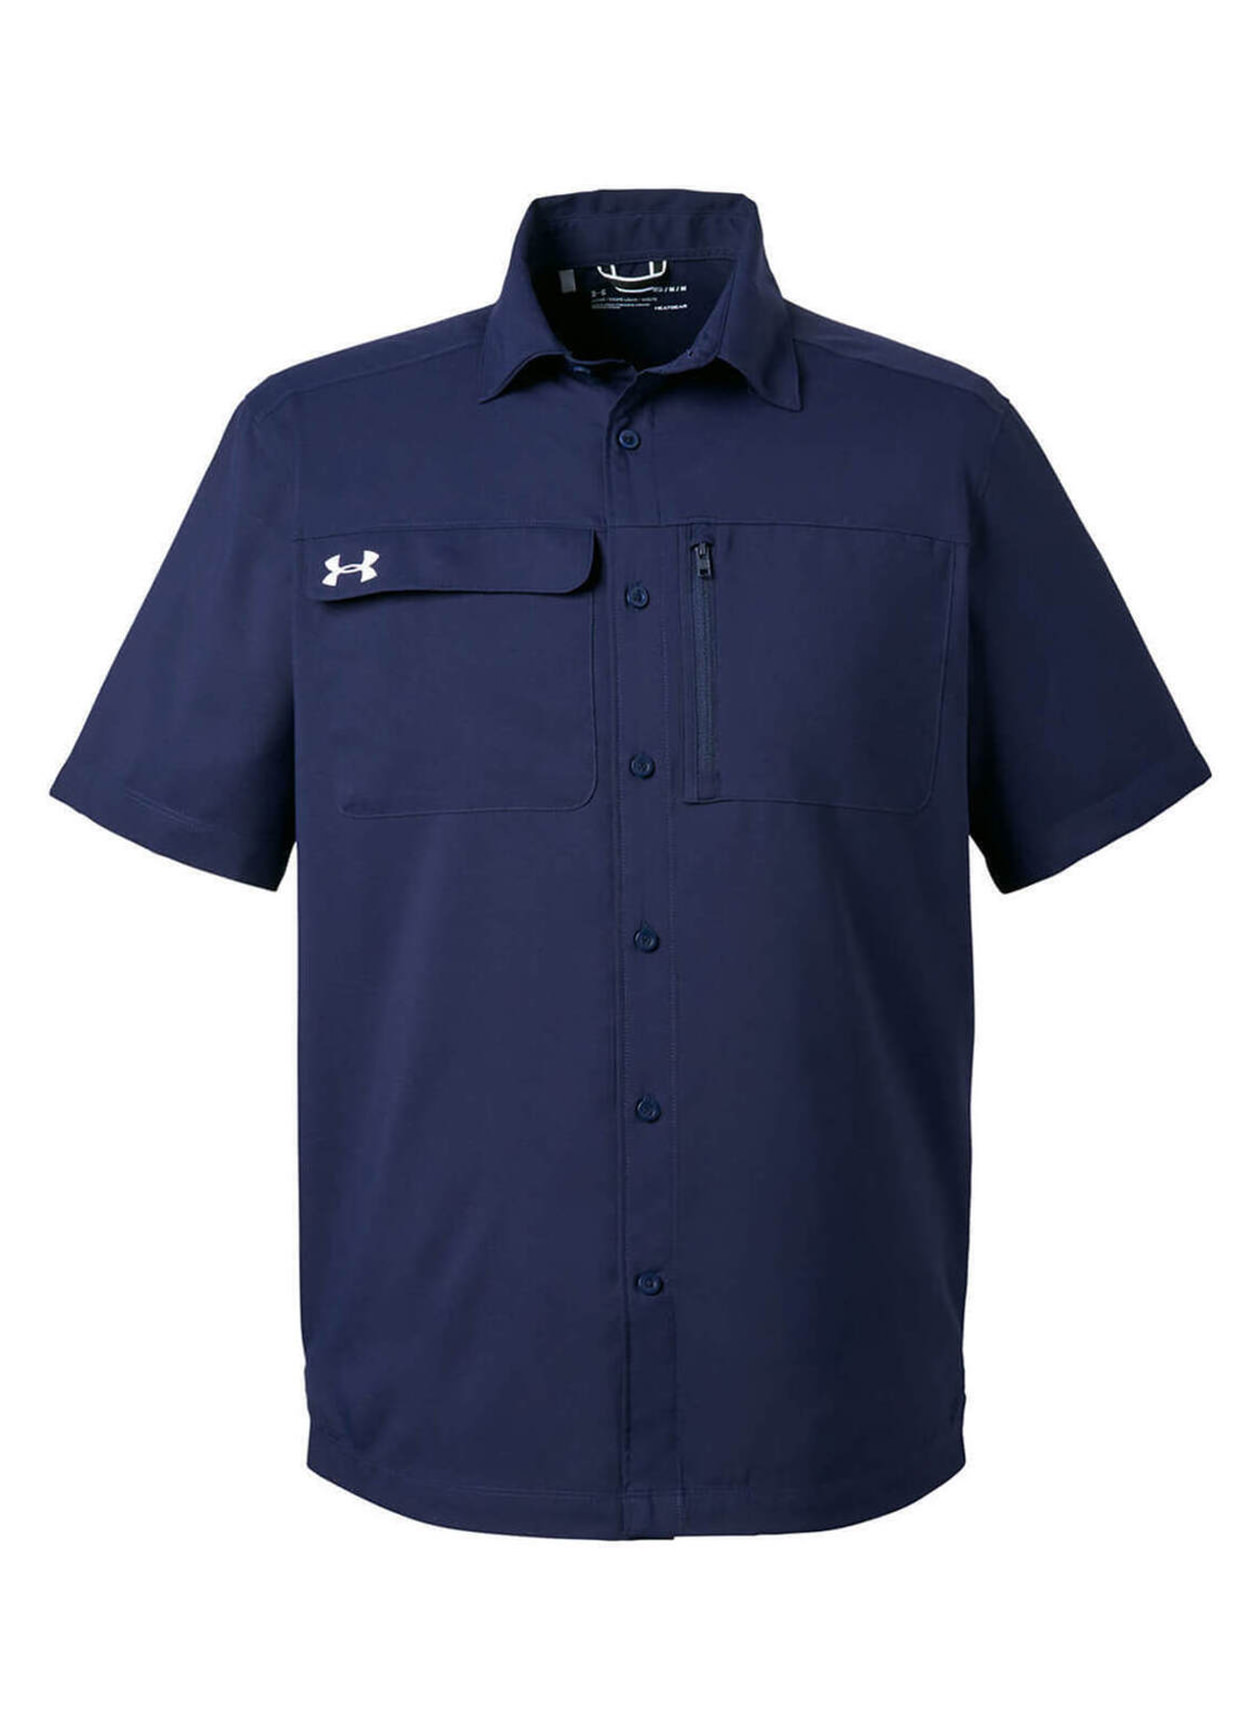 Company Under Armour Men's Midnight Navy Motivate Coach Woven Shirt